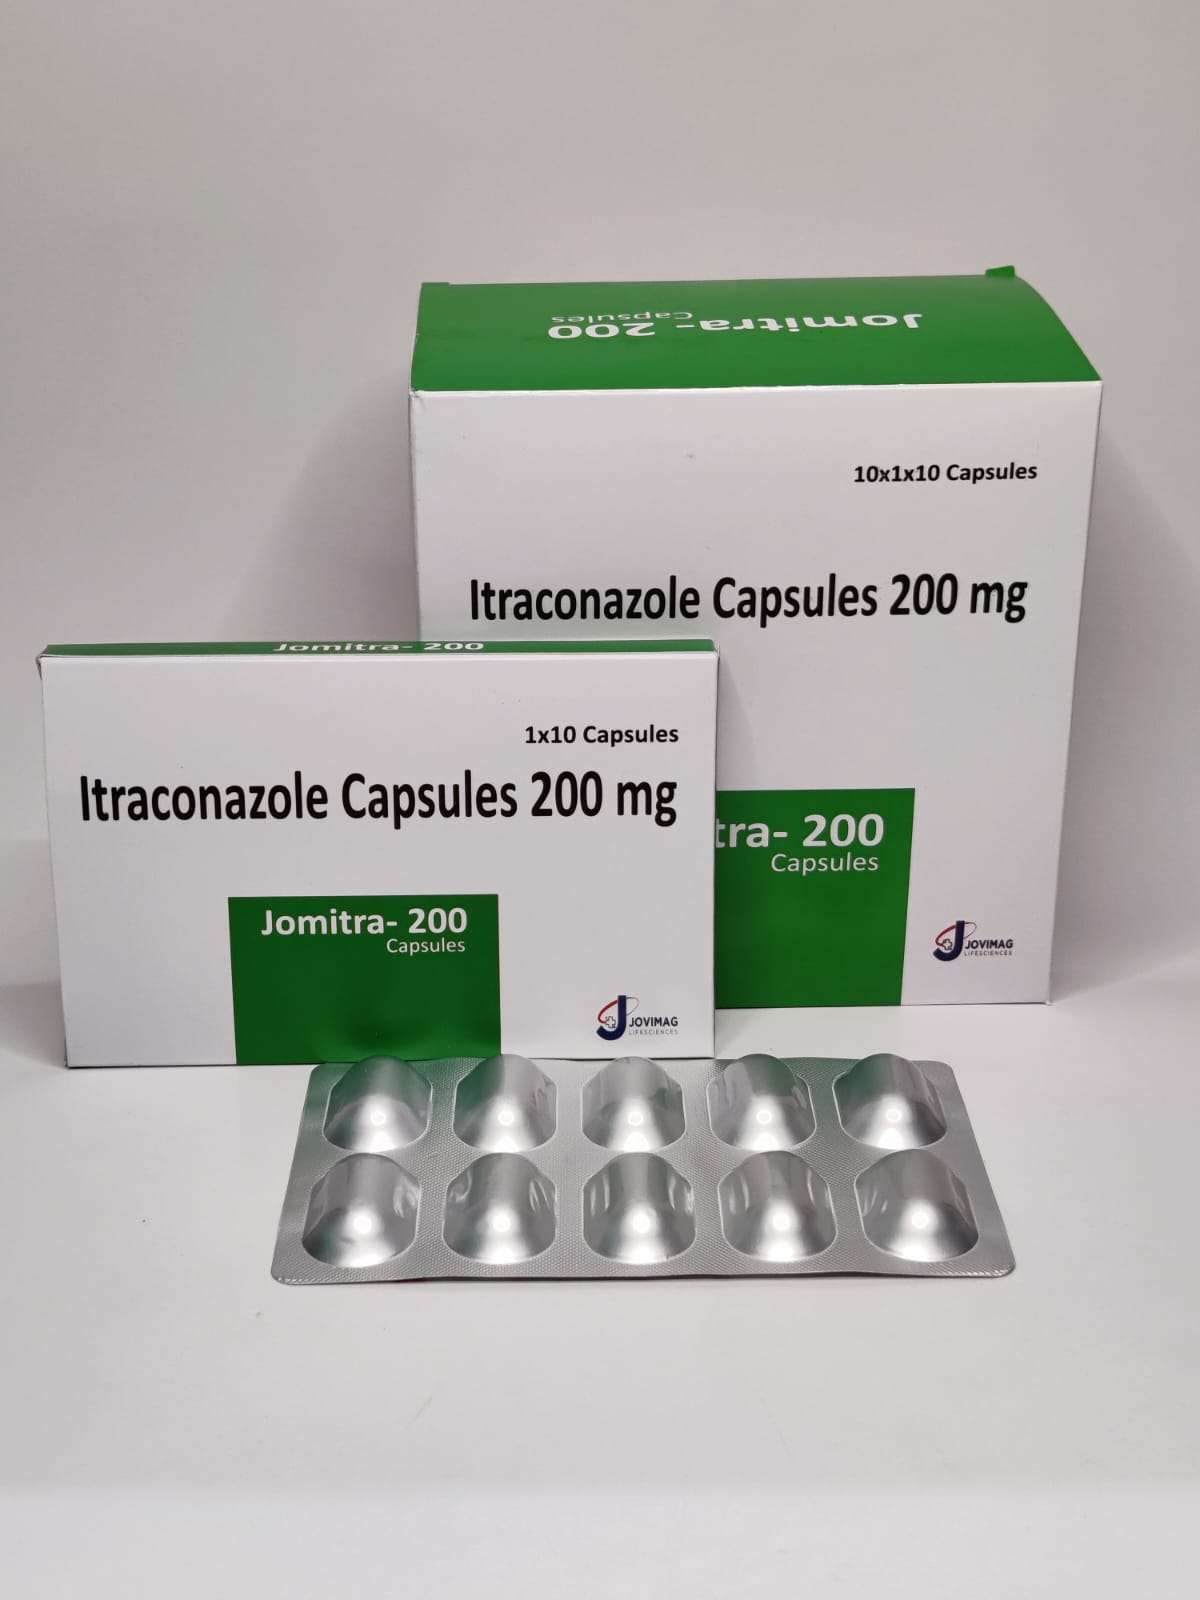 itraconazole 200 mg capsules